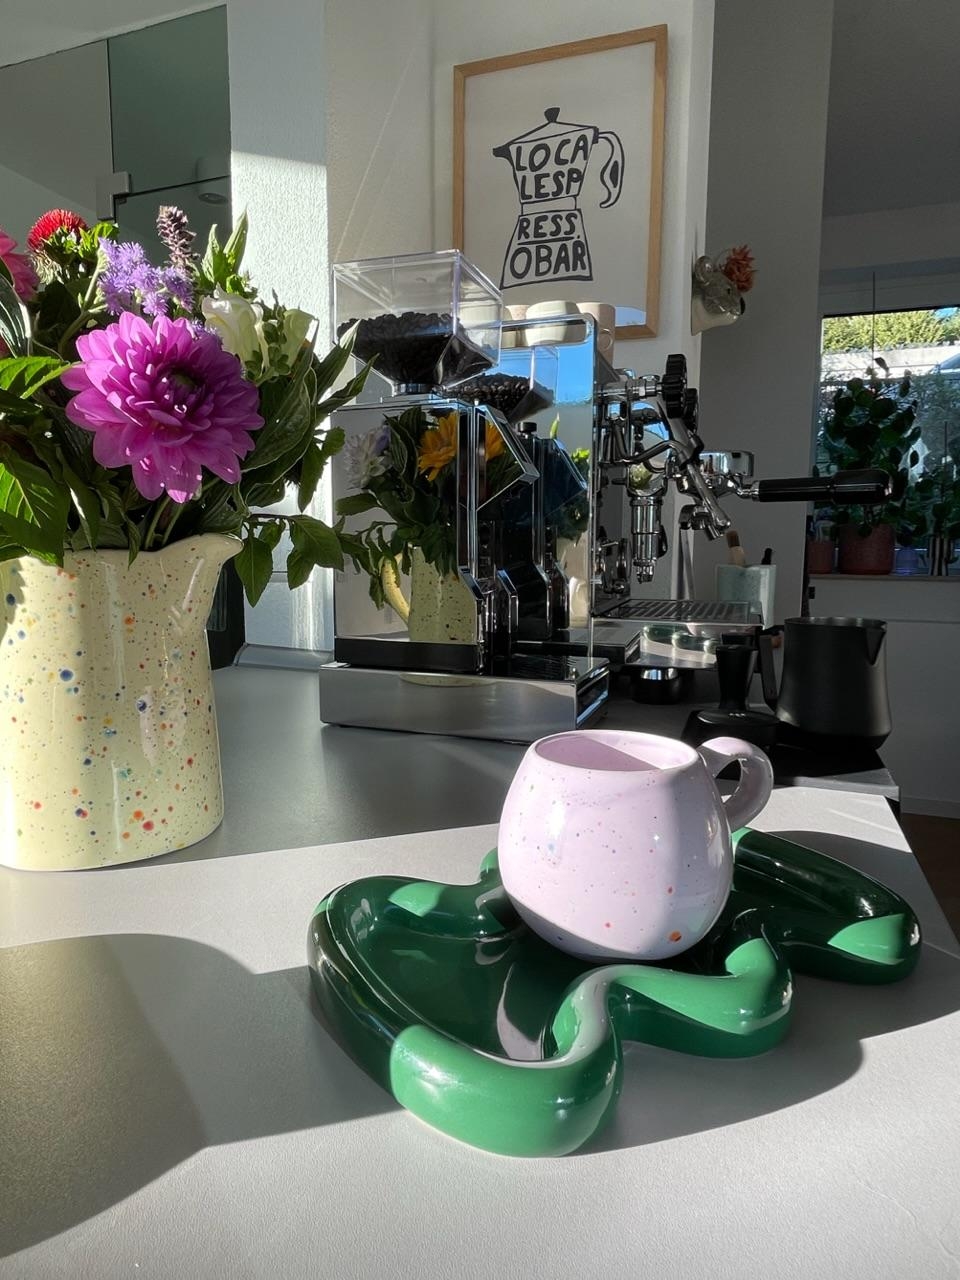 Kaffeeliebe!!!! ☕️ 

#küche #kaffeeecke #keramik #kücheninspo #lieblingstasse #siebträger